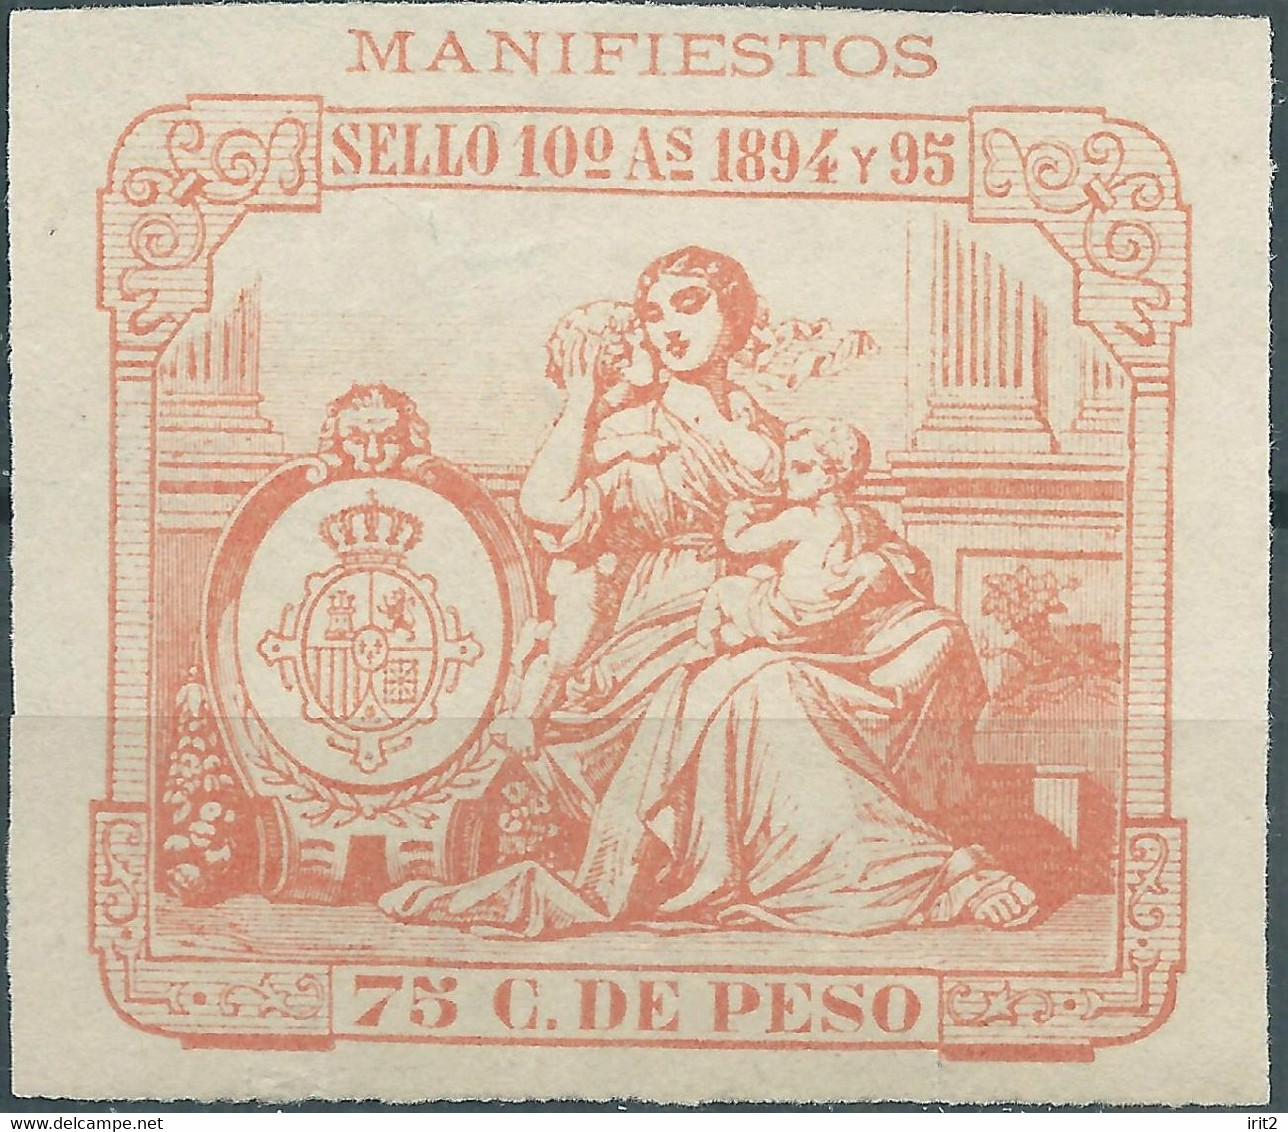 Puerto Rico-Portorico, Spanish Revenue Stamps,1894-95 Manifiestos 75c.De Peso,Mint - Puerto Rico